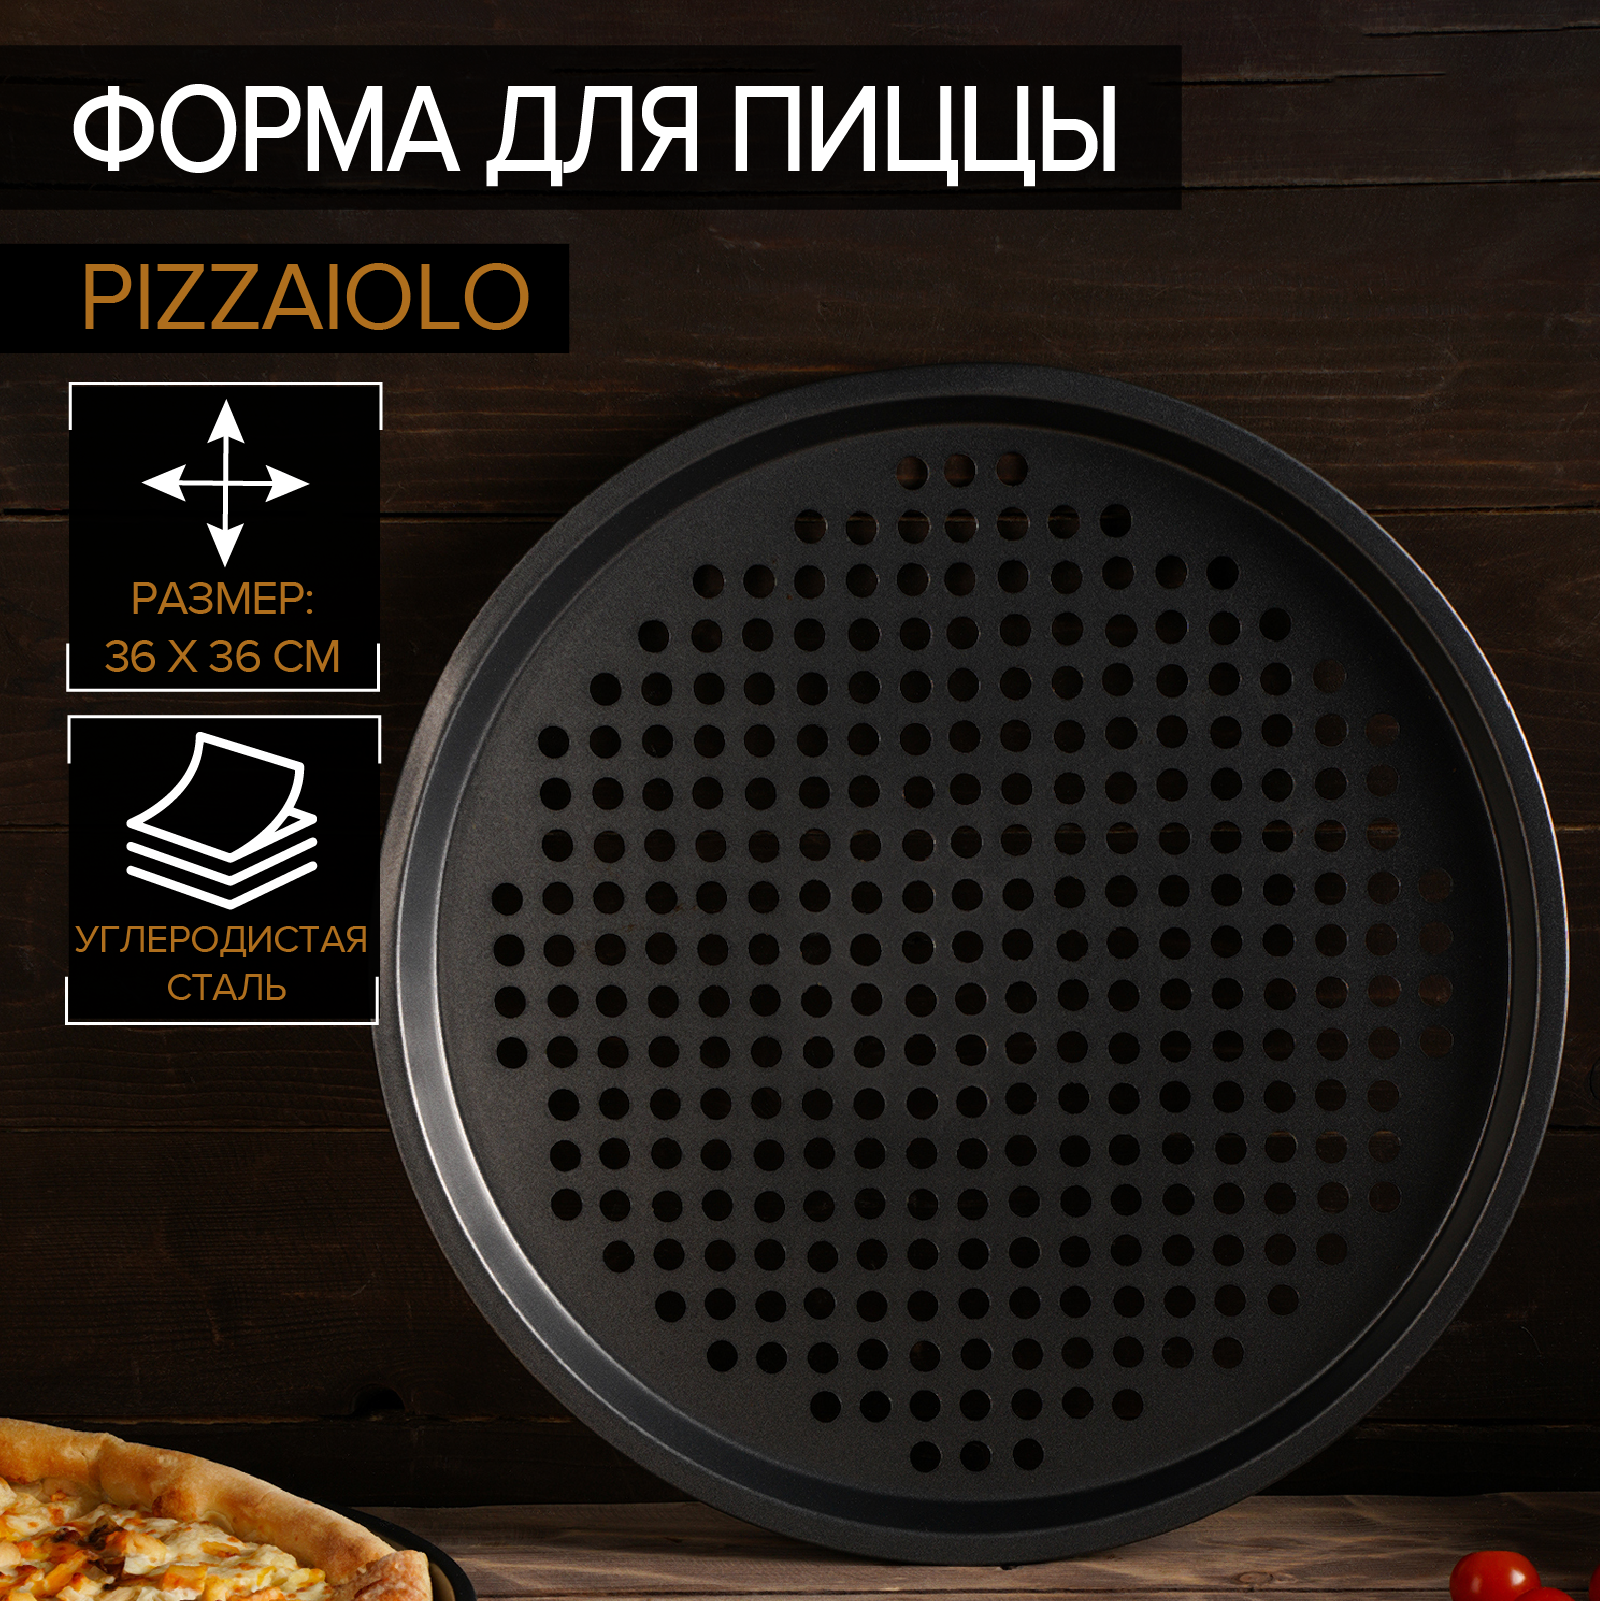 Форма для пиццы Magistro "Pizzaiolo" 36×2 см